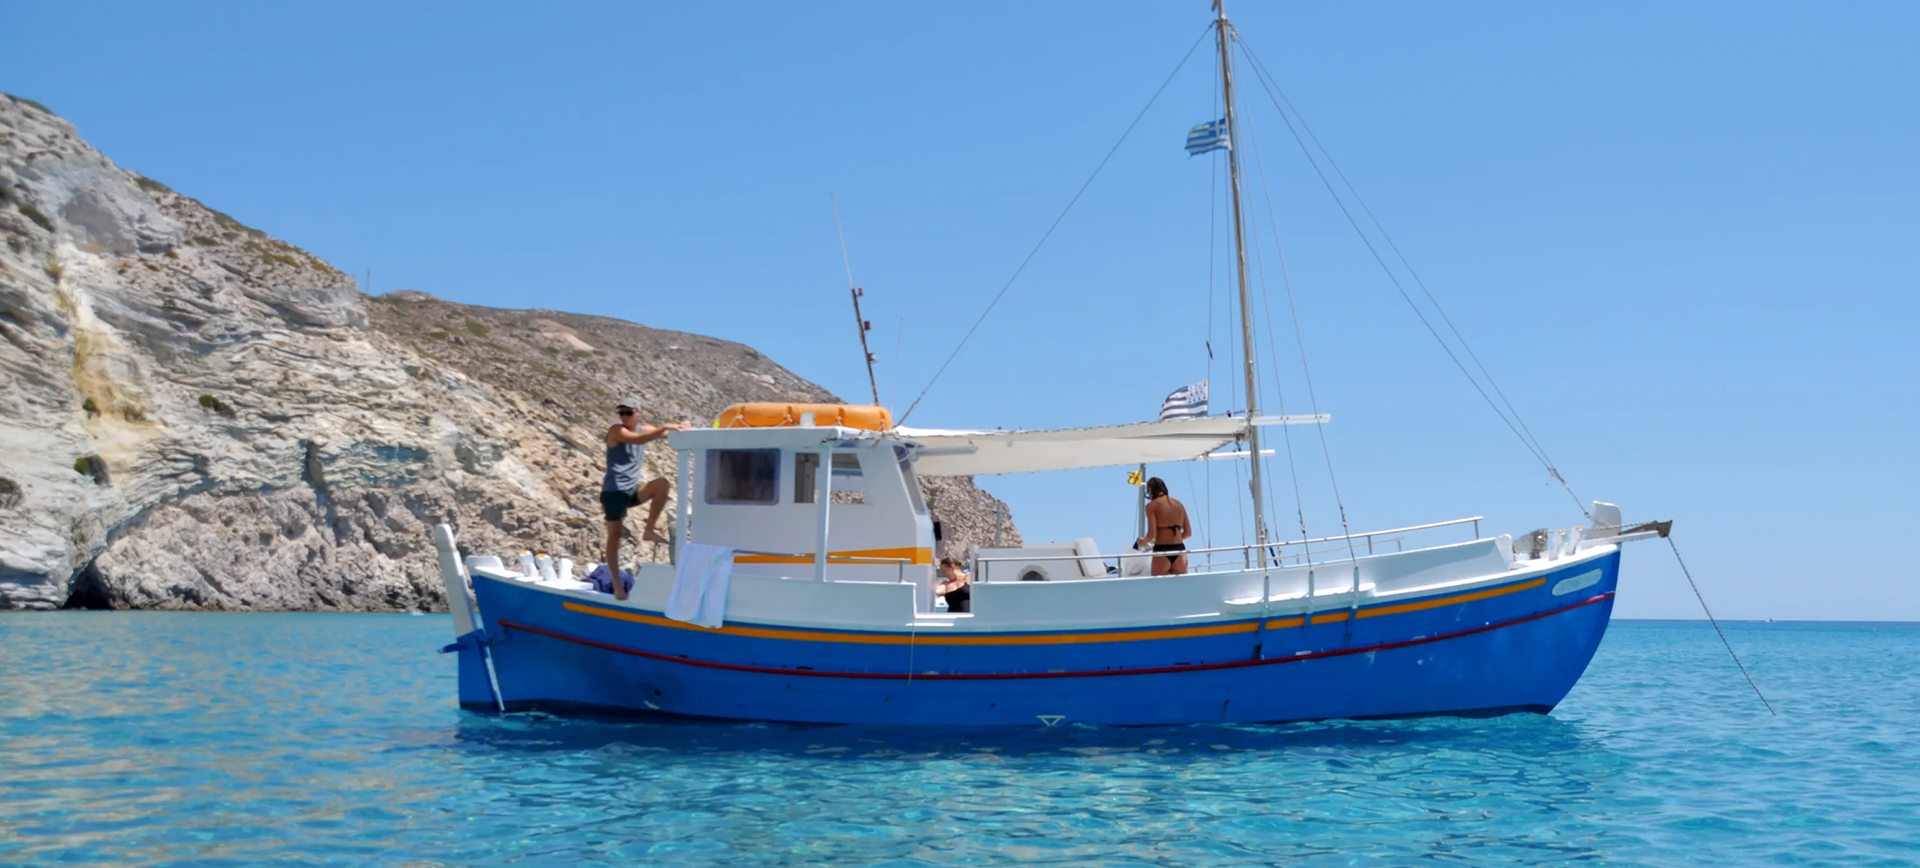 greece elopement - milos beach wedding with boat cruise